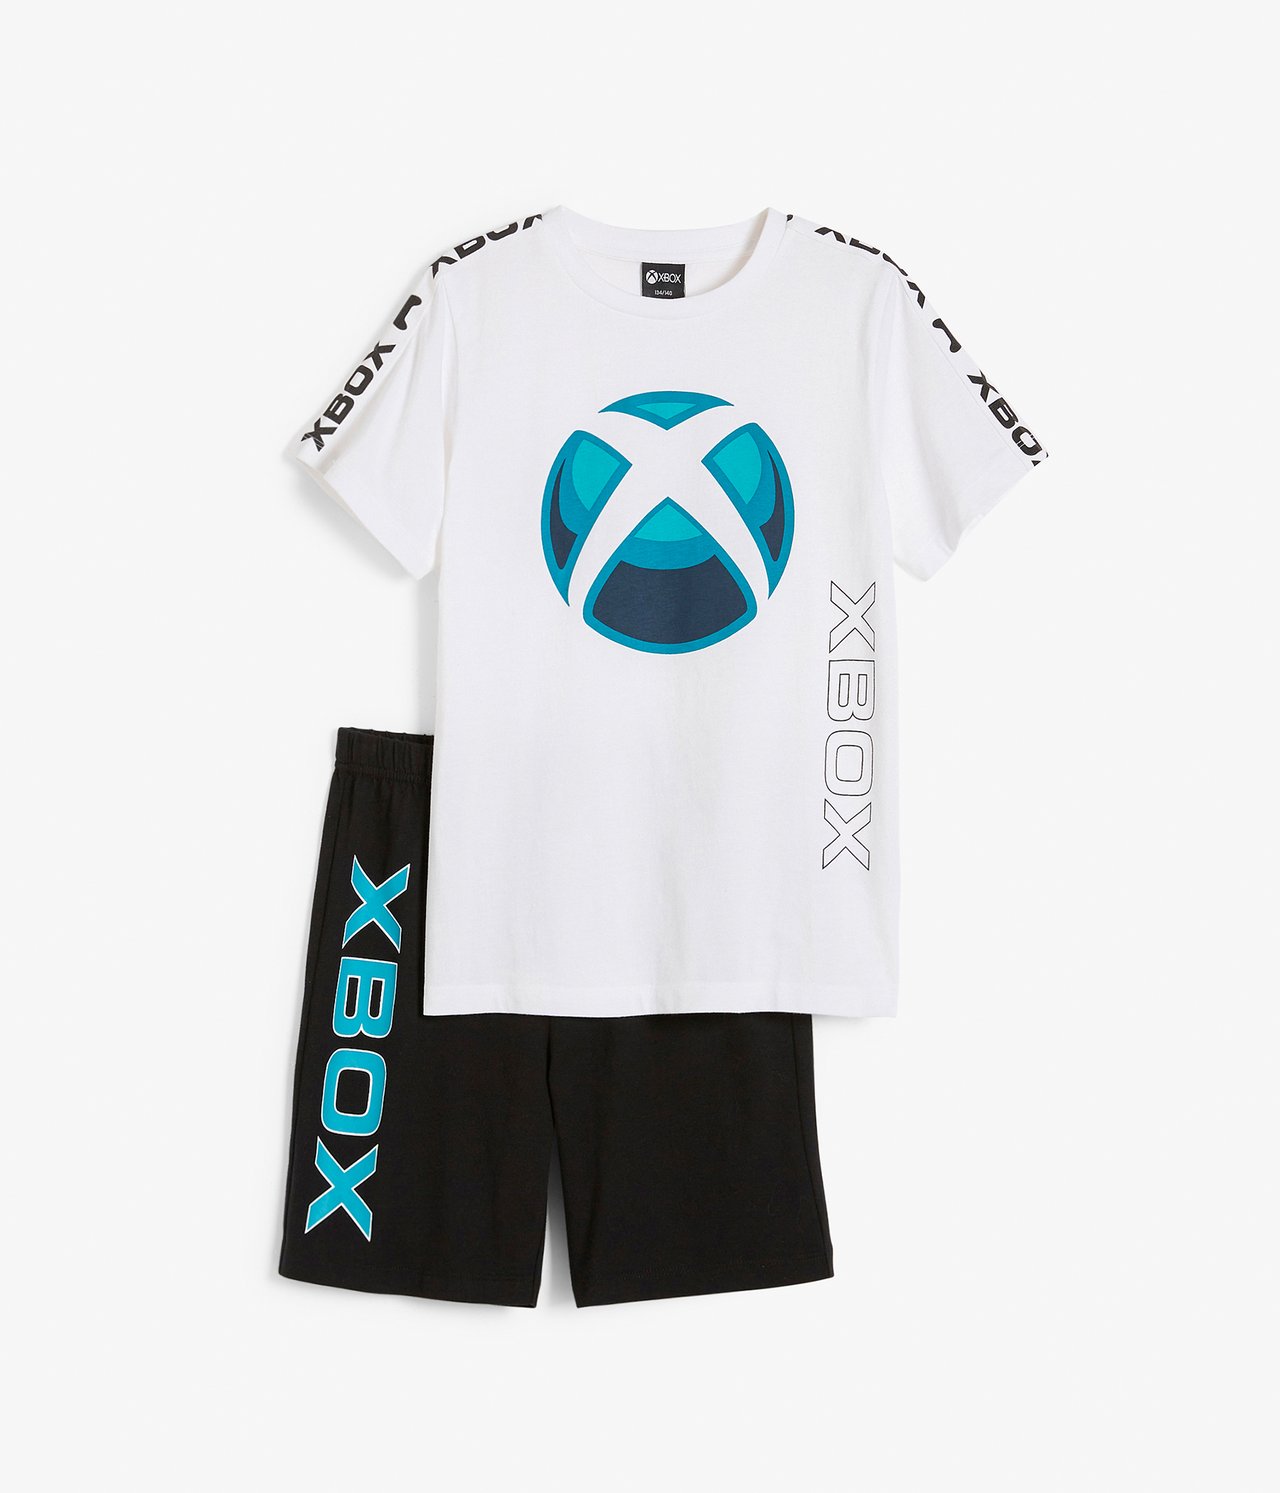 Xbox-pyjama - Musta - 2